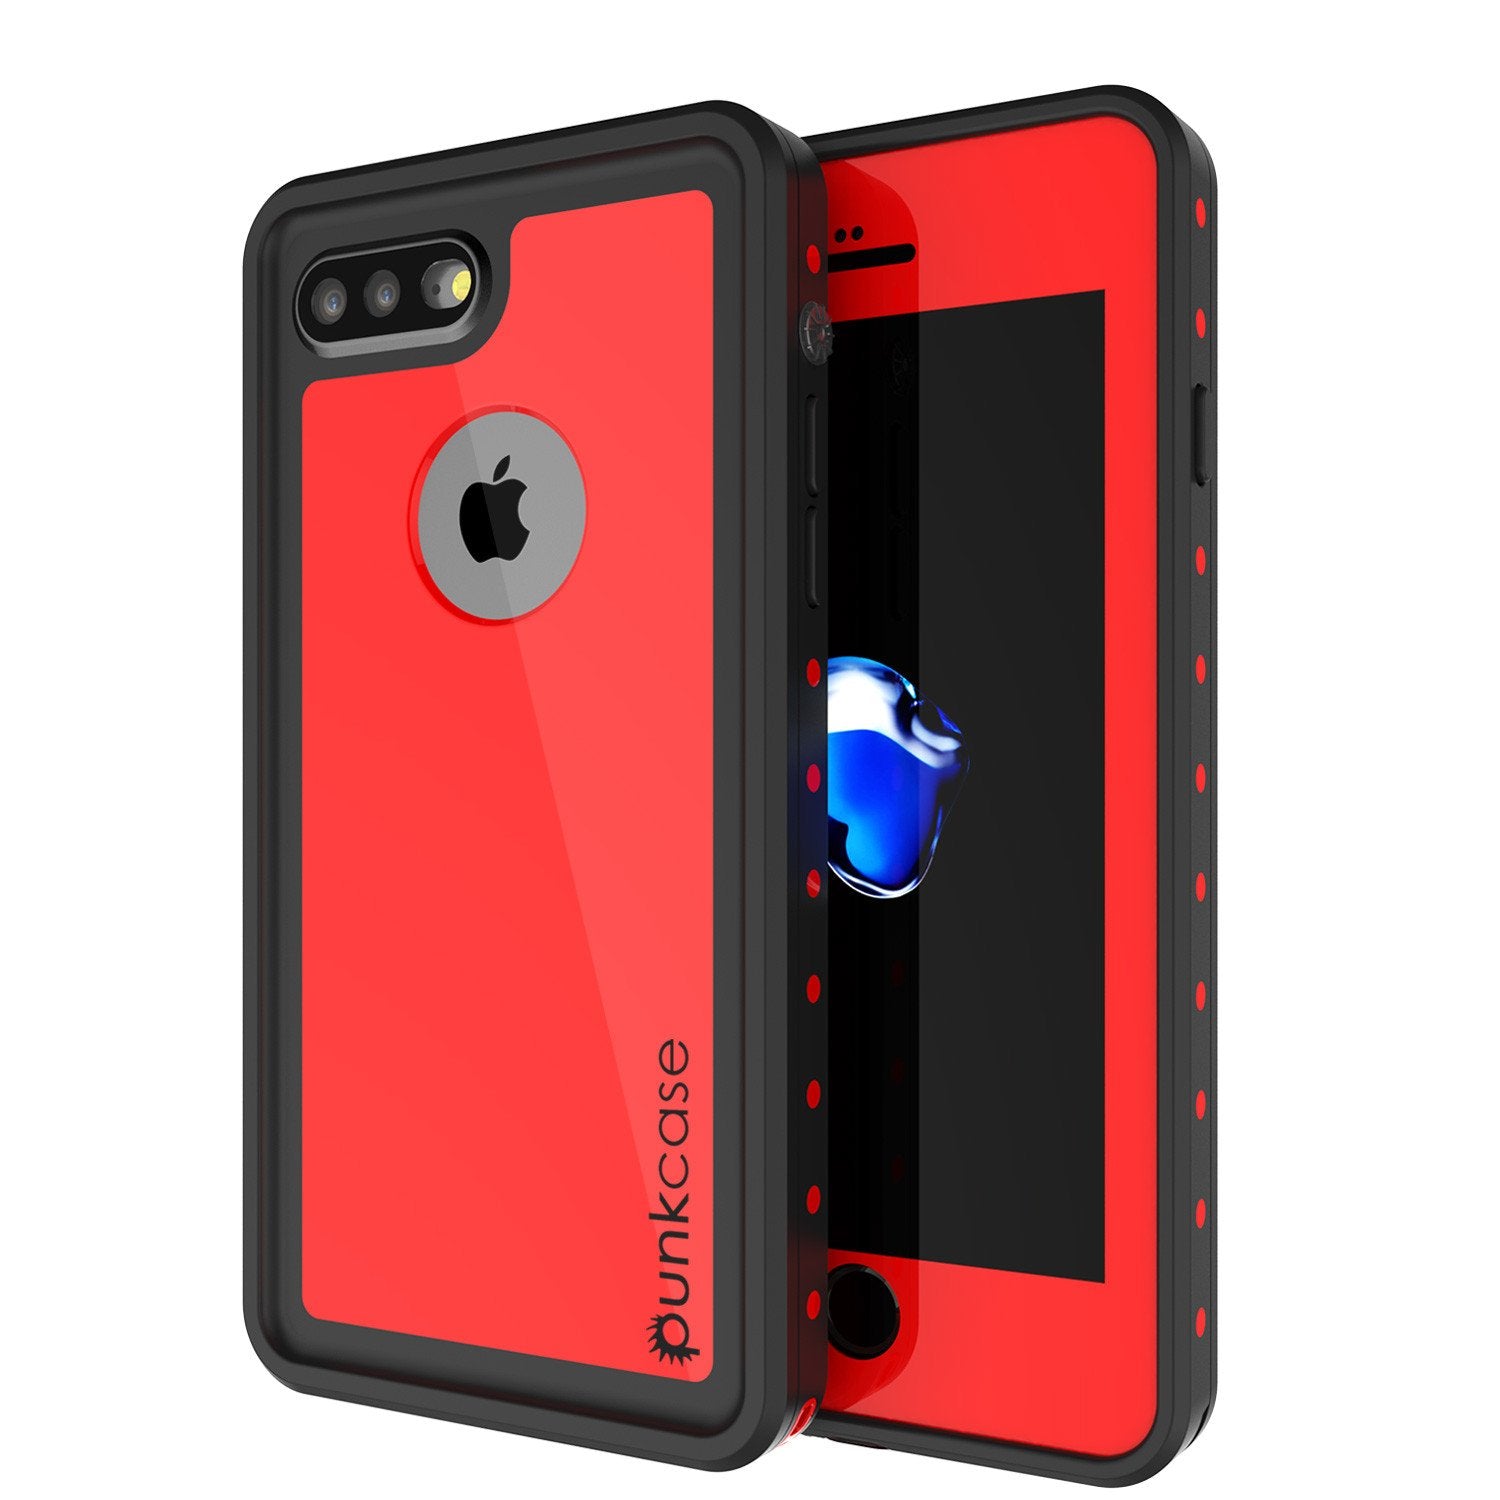 Red iPhone 8 Plus Case Punkcase - | iPhone – 8 punkcase Plus Waterproof